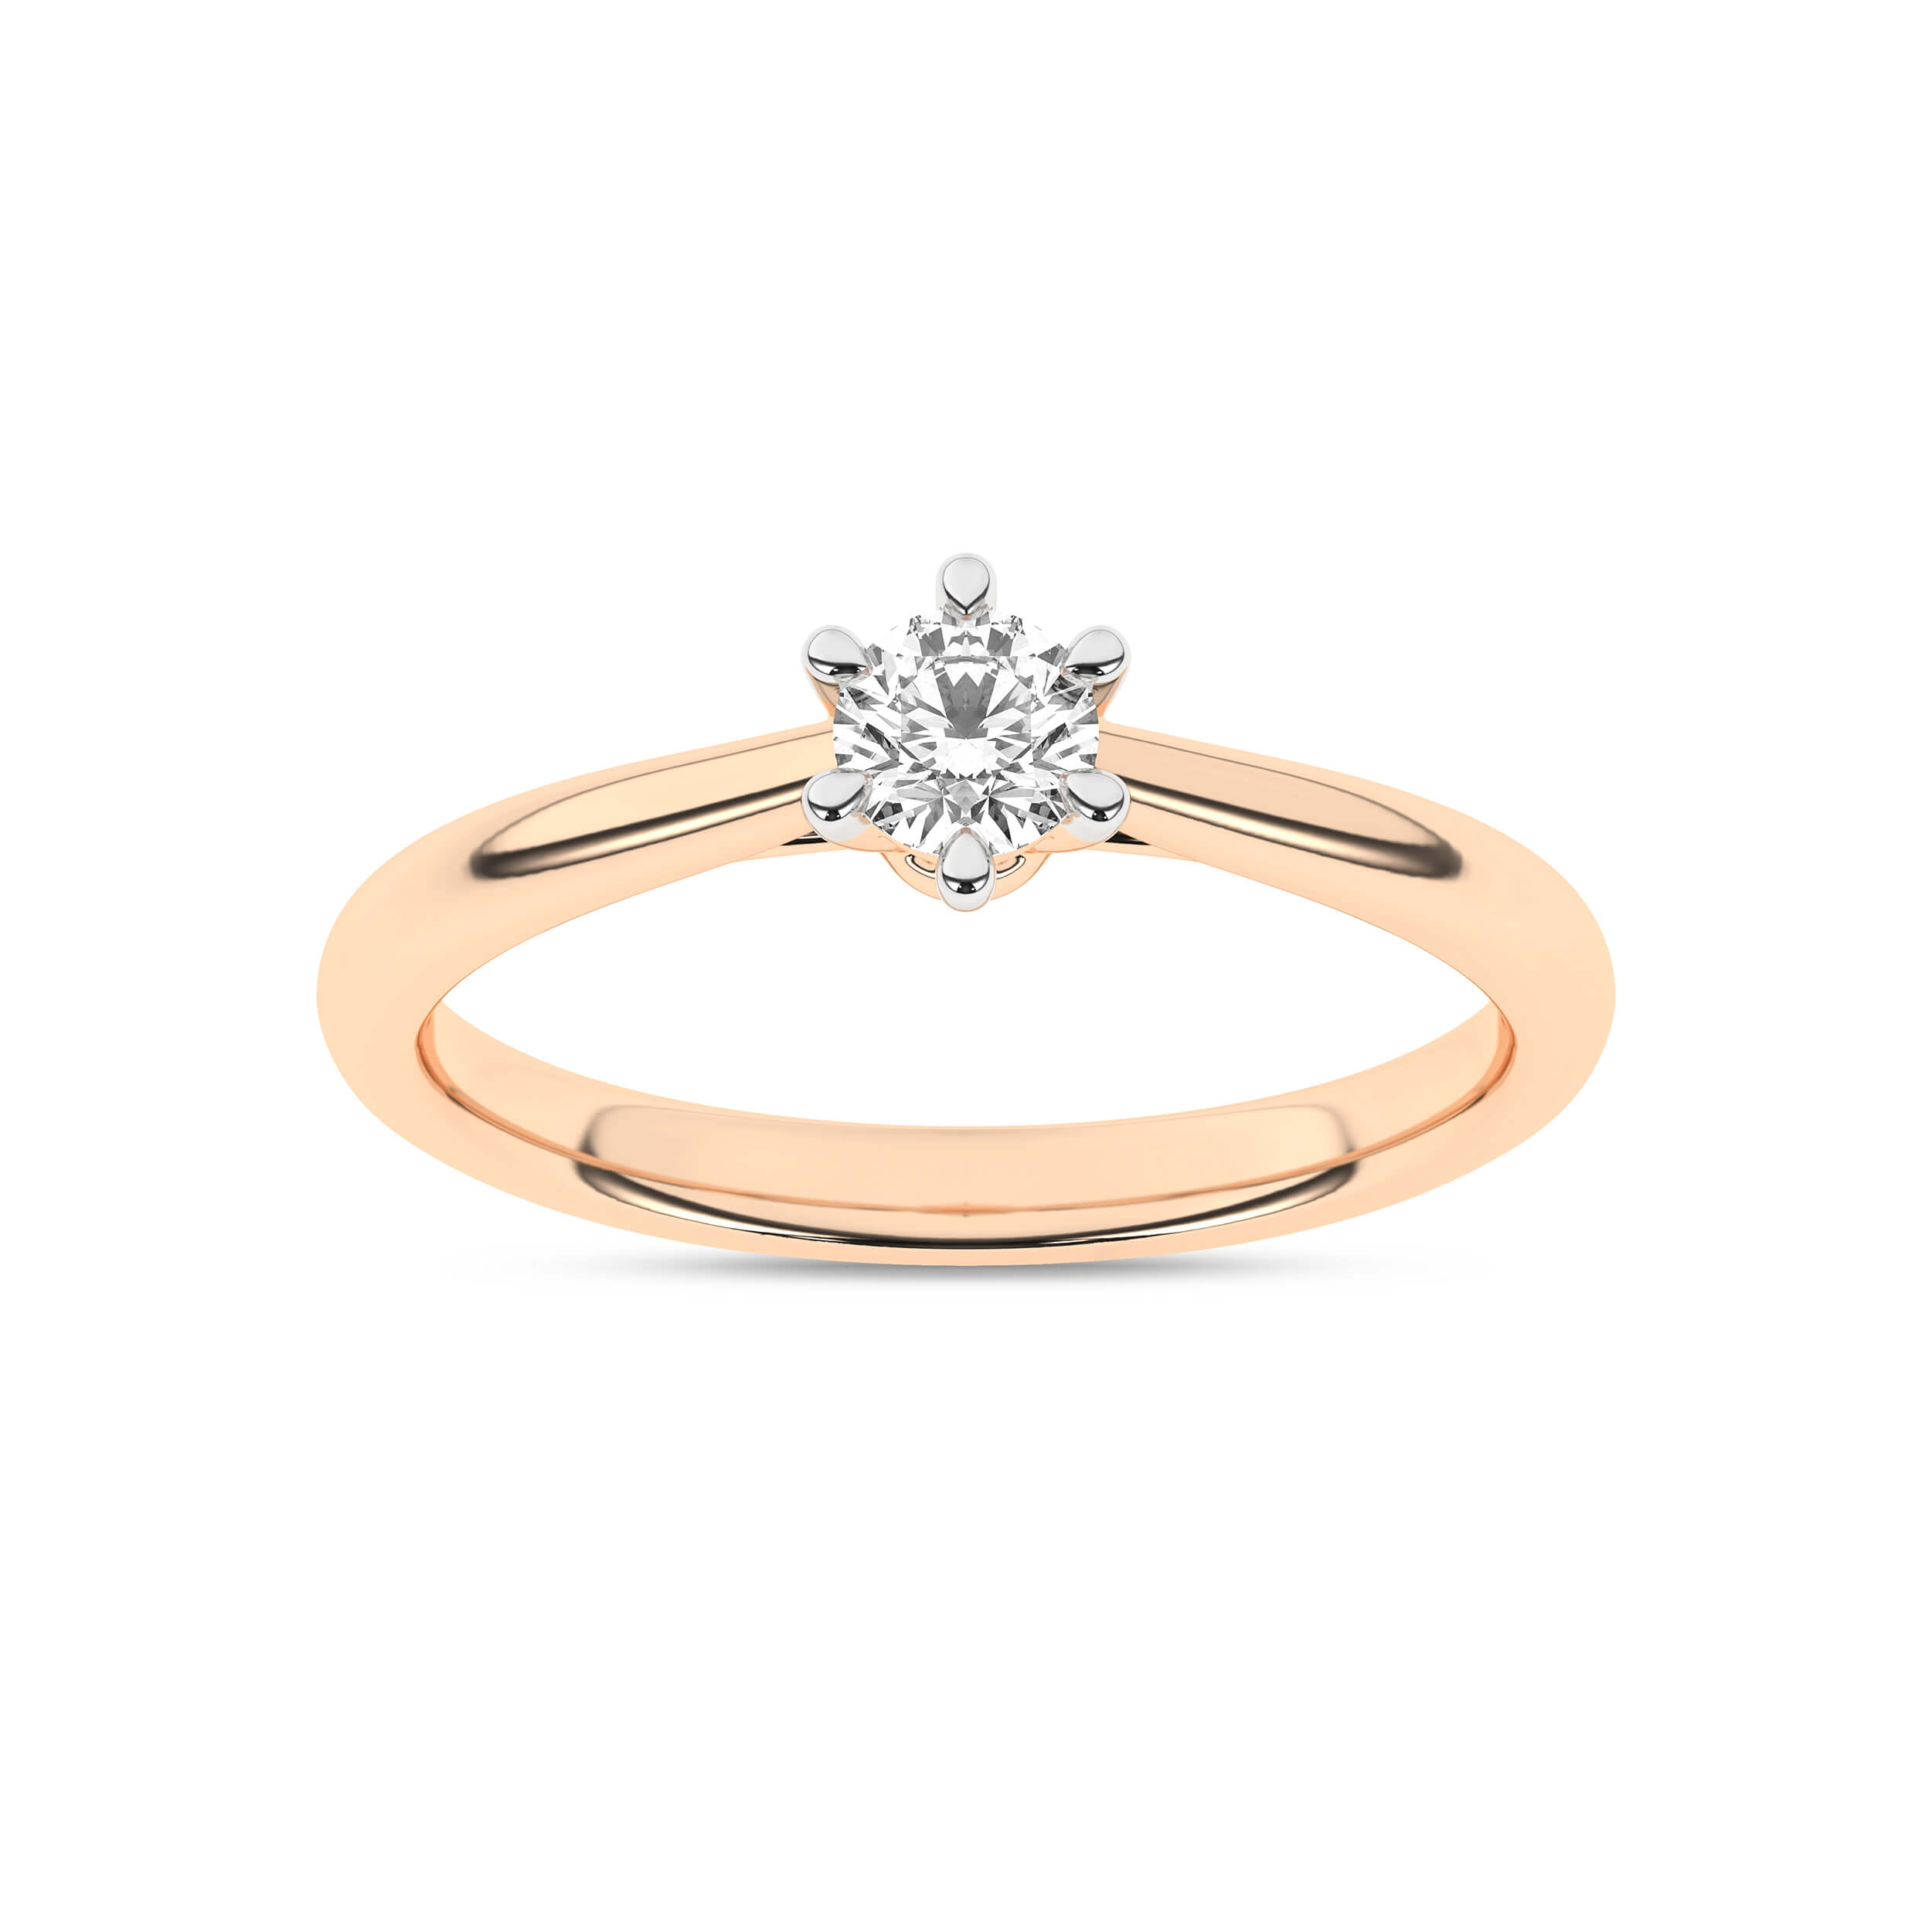 Inel de logodna din Aur Roz 14K cu Diamant 0.25Ct, articol RS1449, previzualizare foto 1